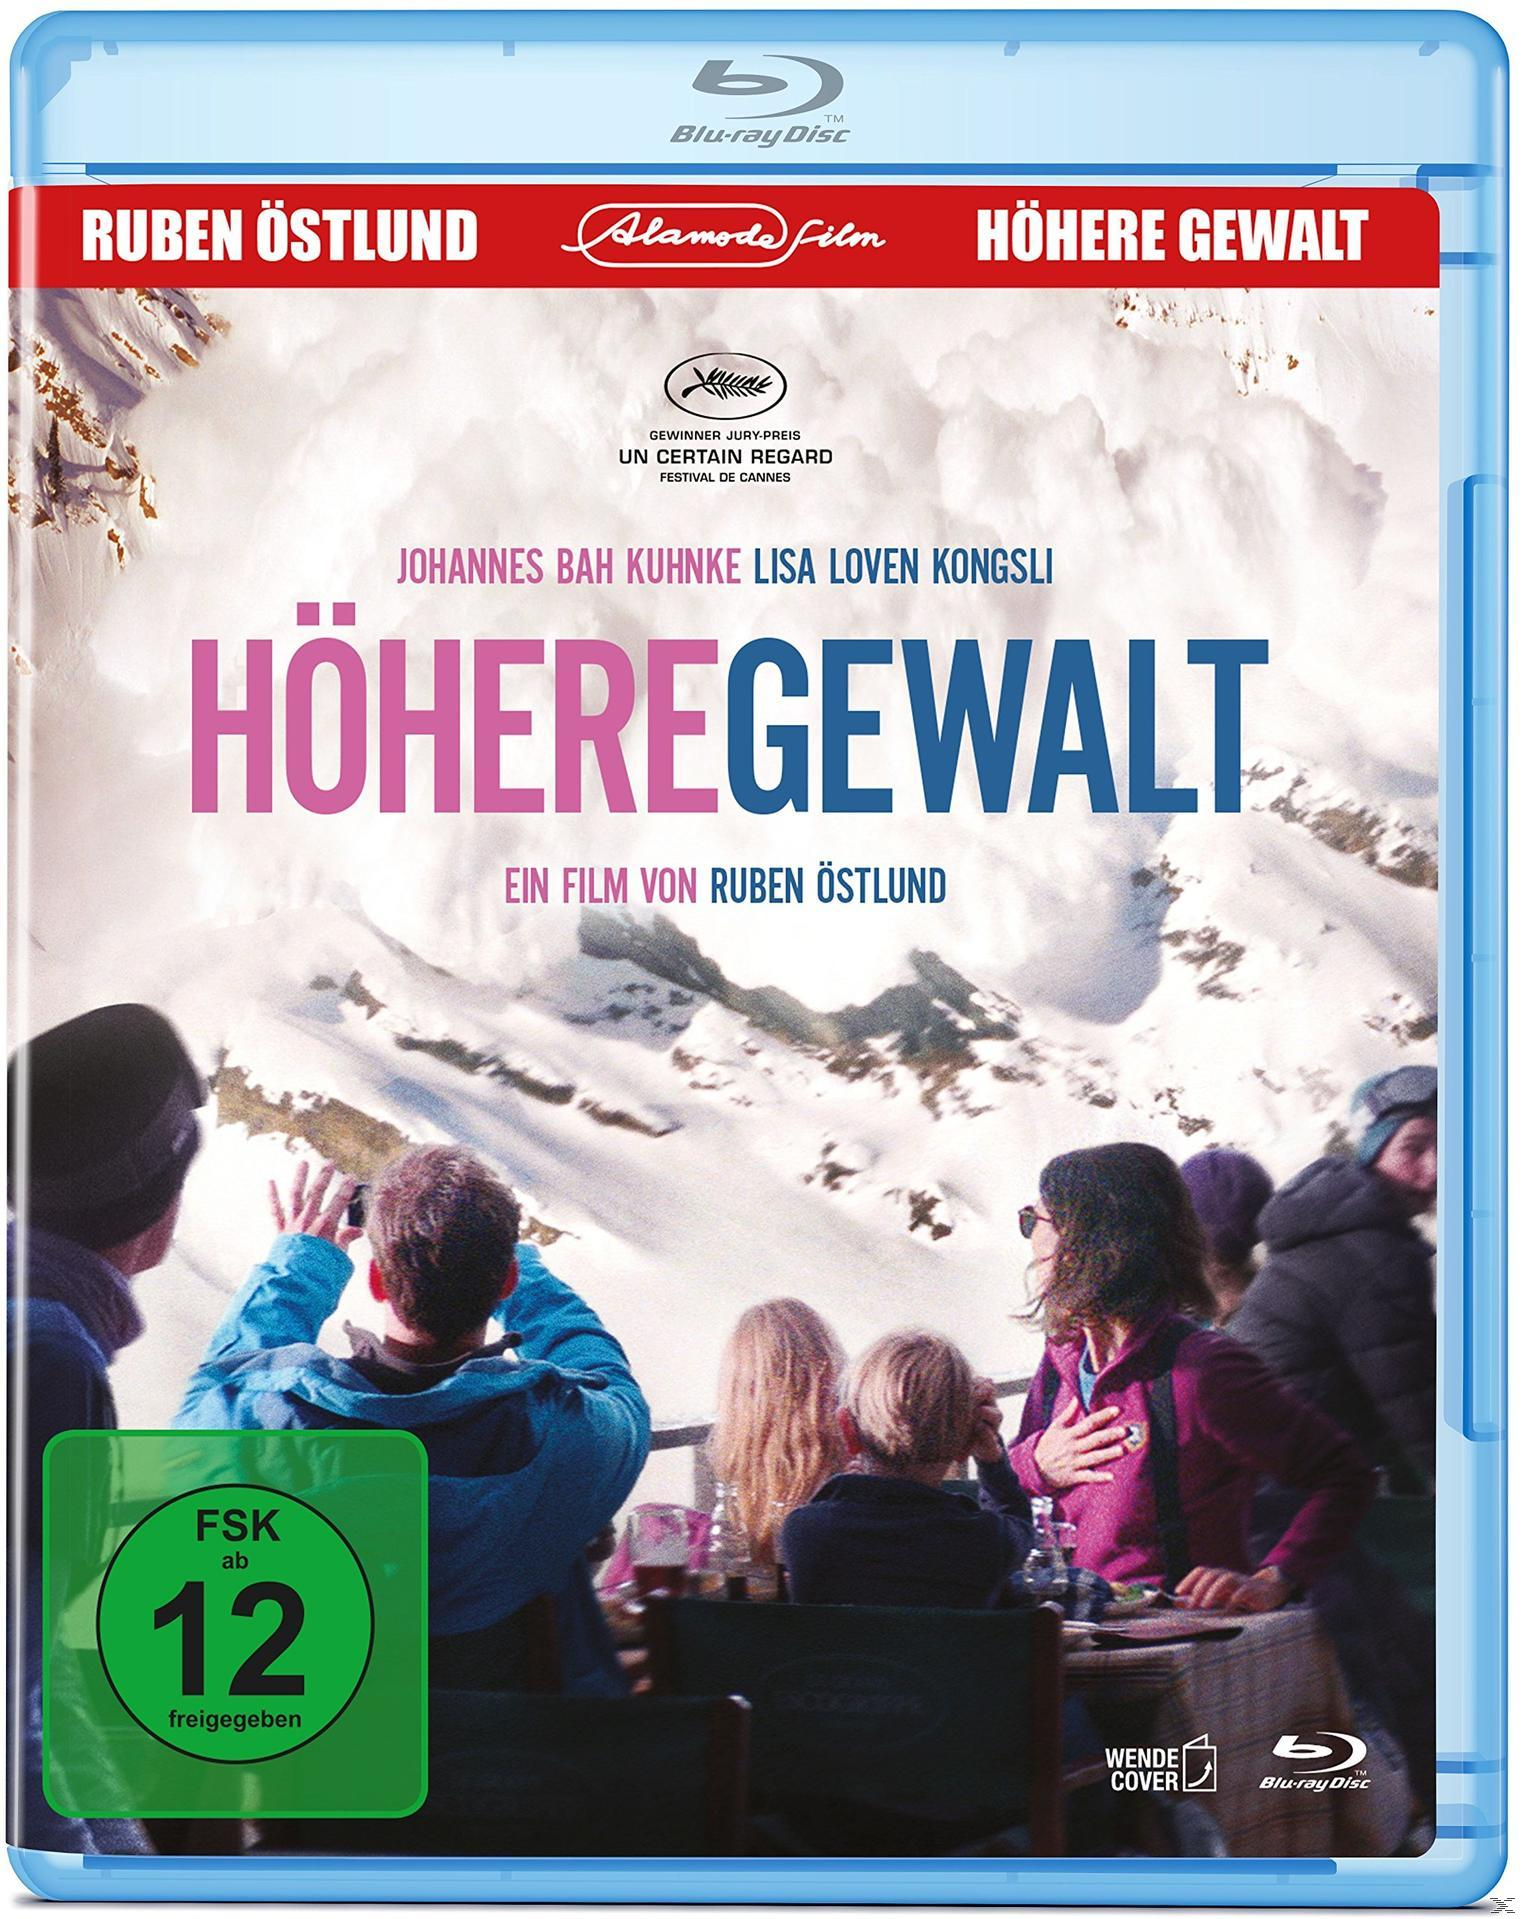 Blu-ray GEWALT HÖHERE